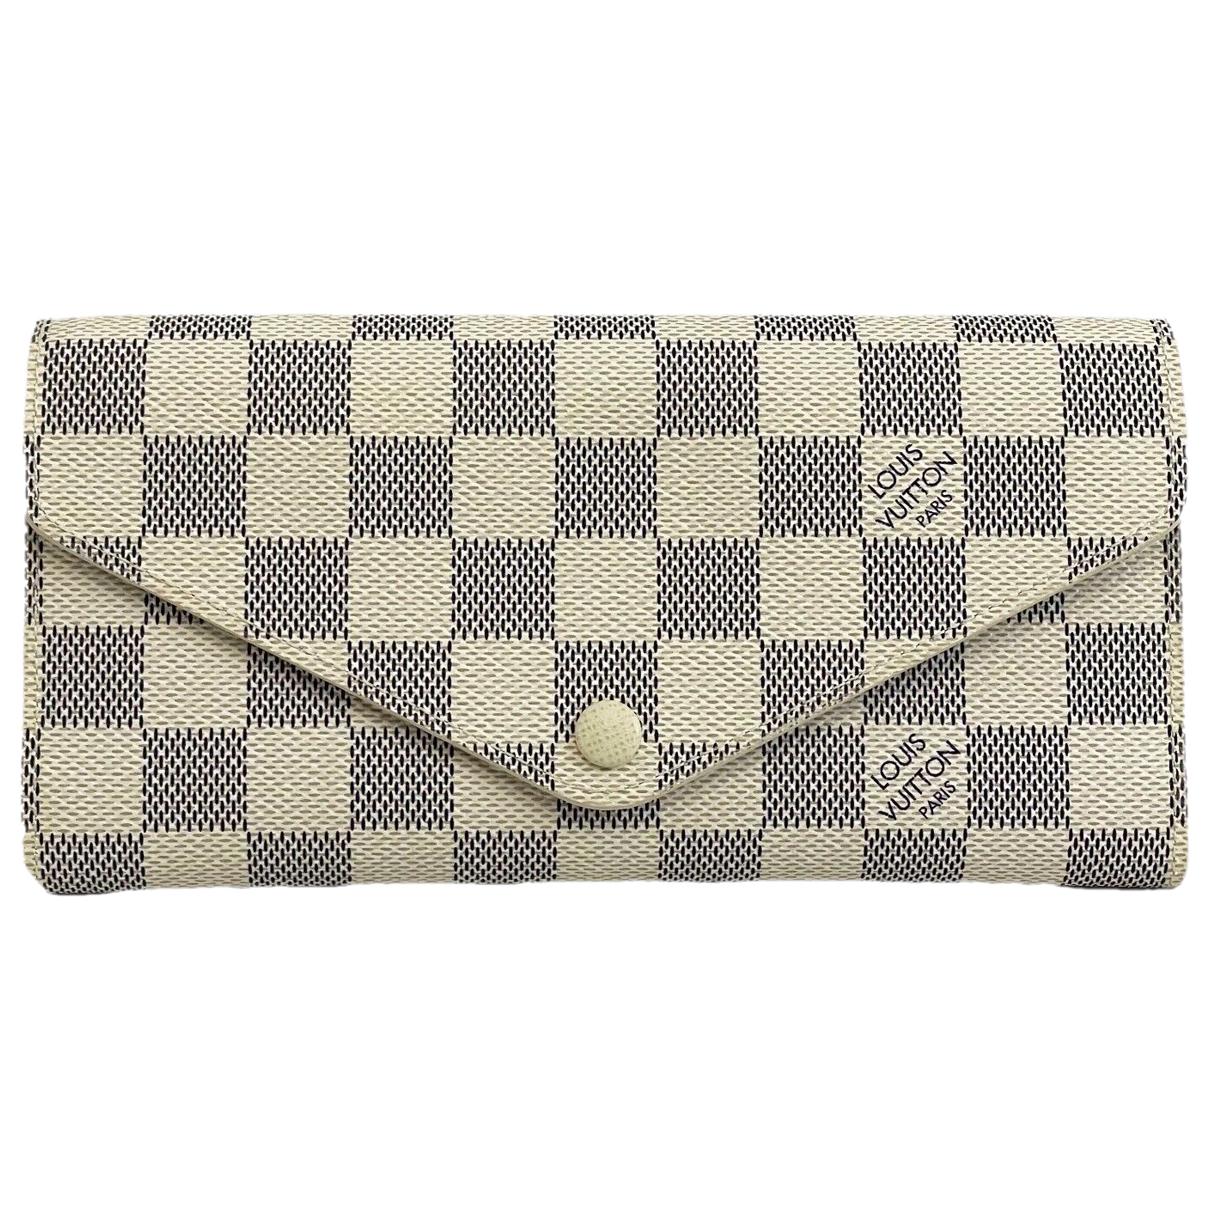 Emilie cloth wallet Louis Vuitton Beige in Cloth - 23673939